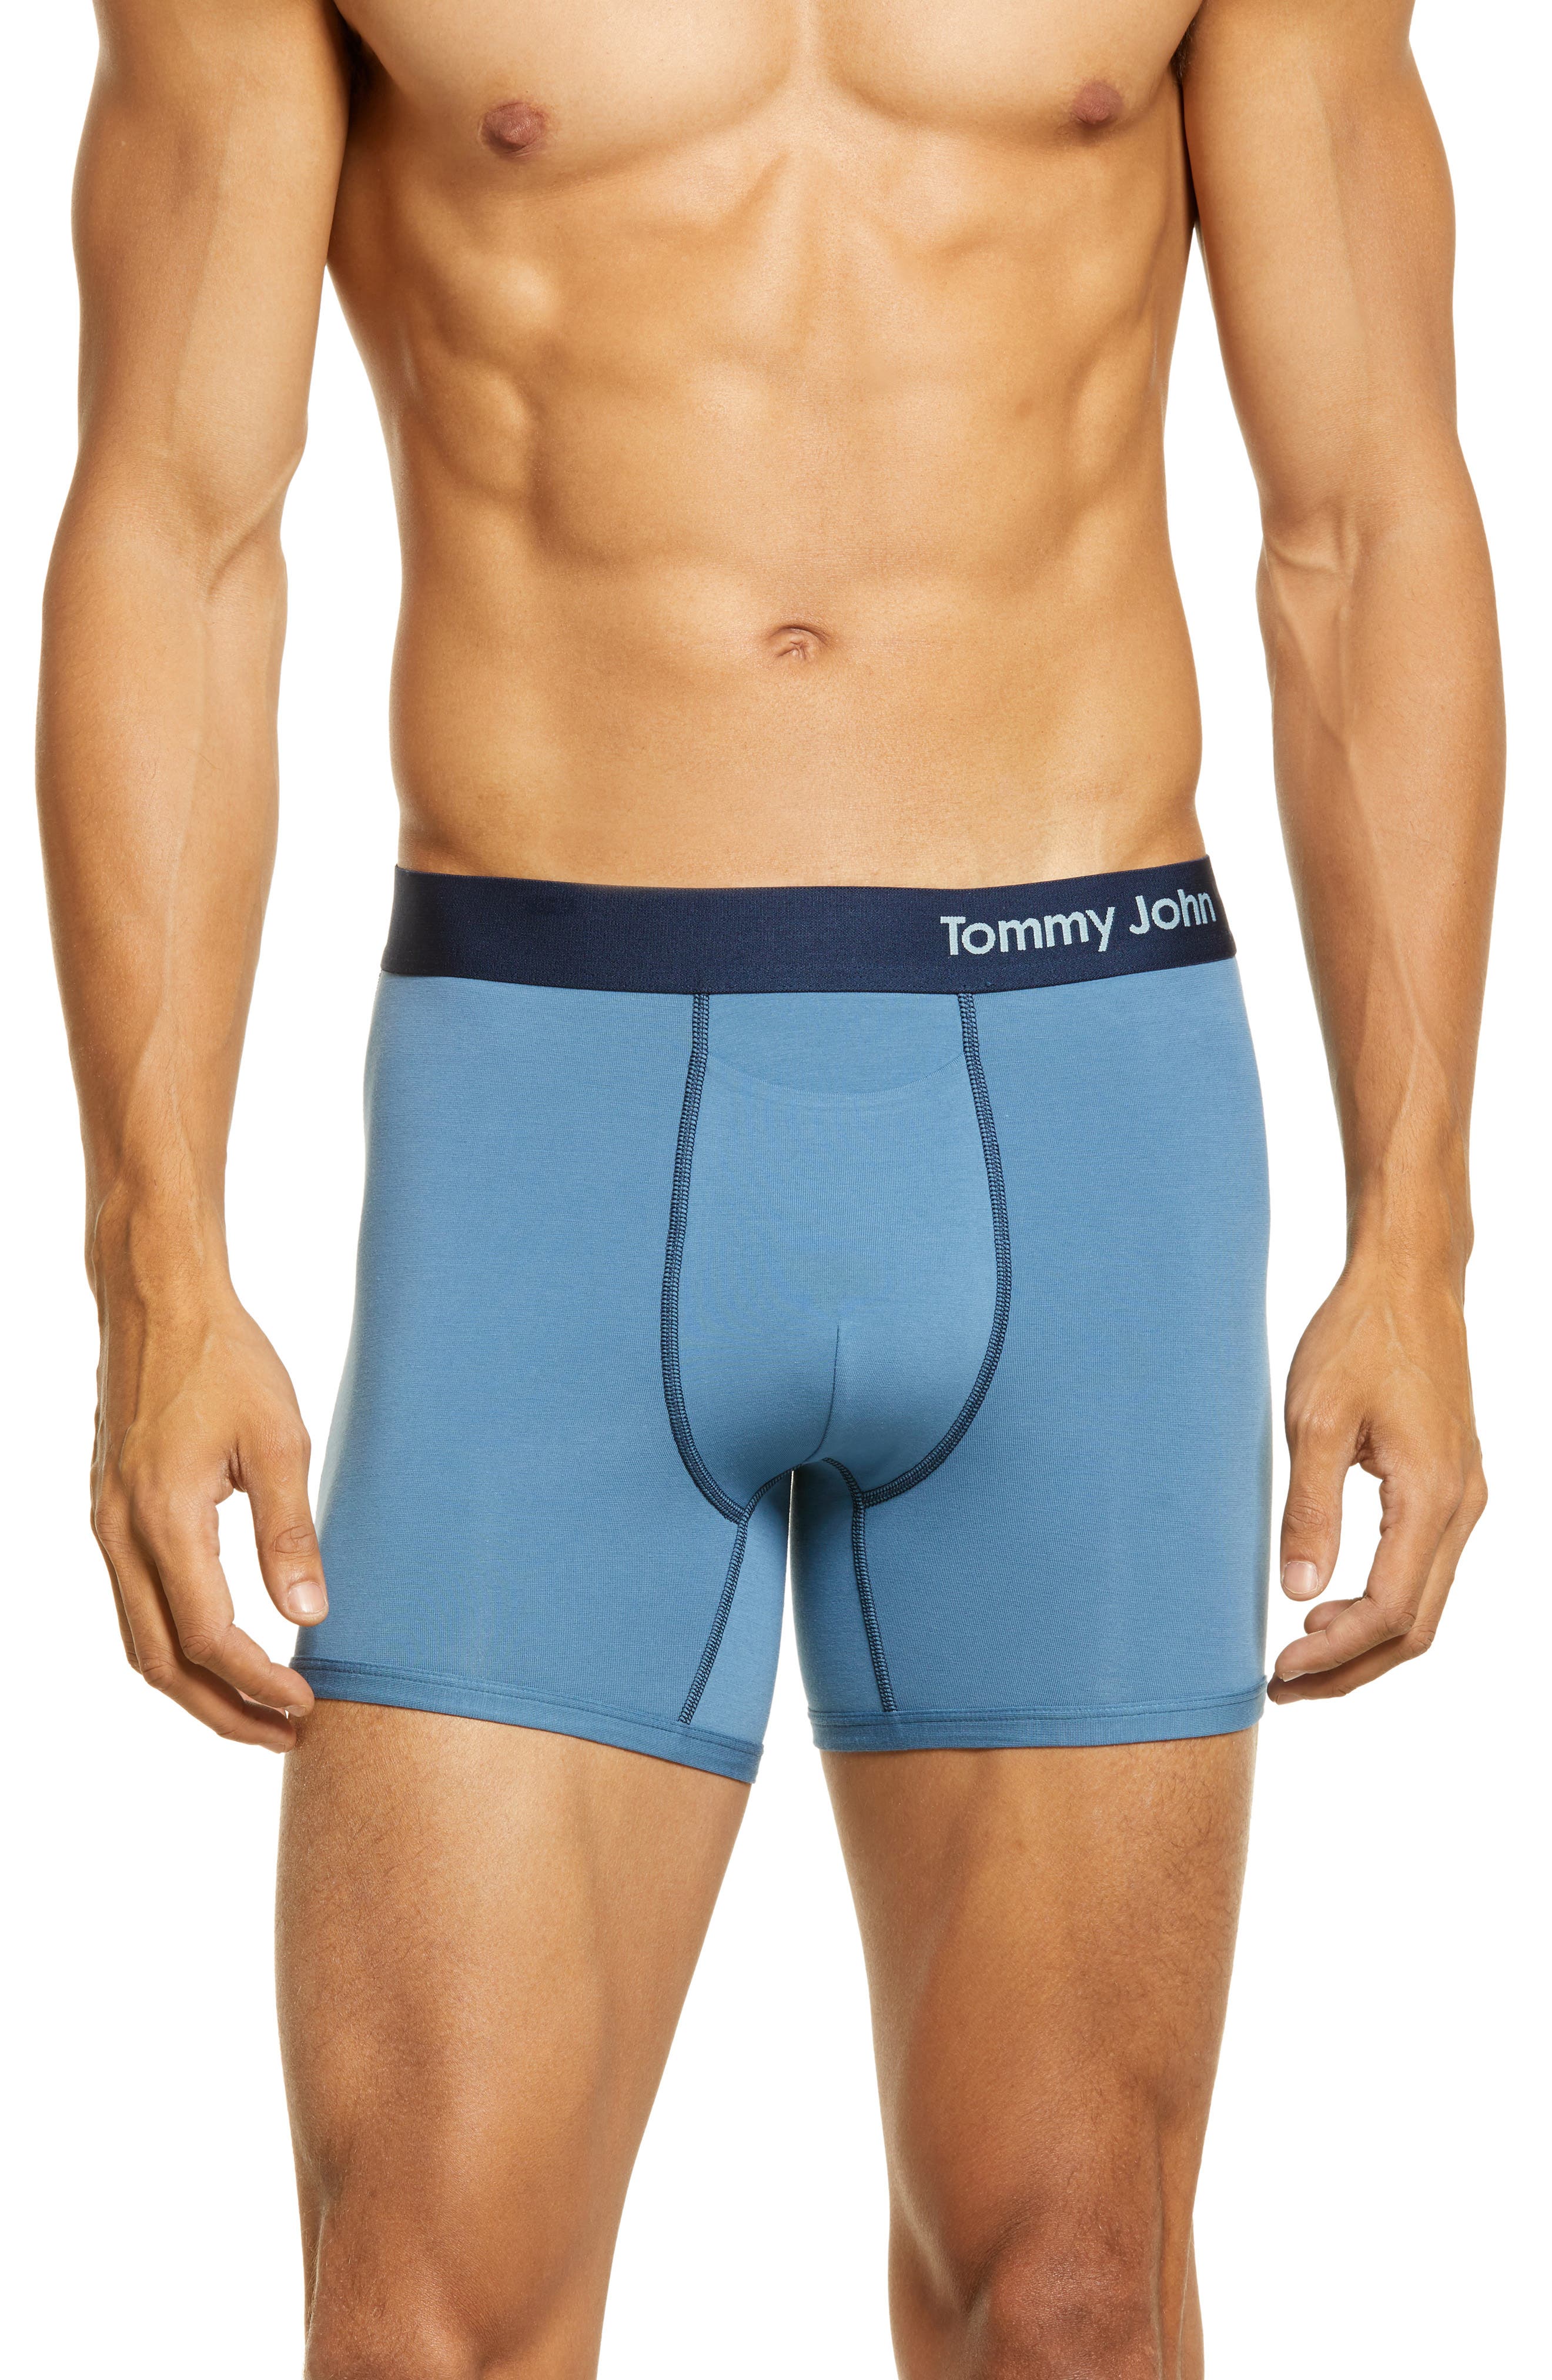 tommy john underwear customer service